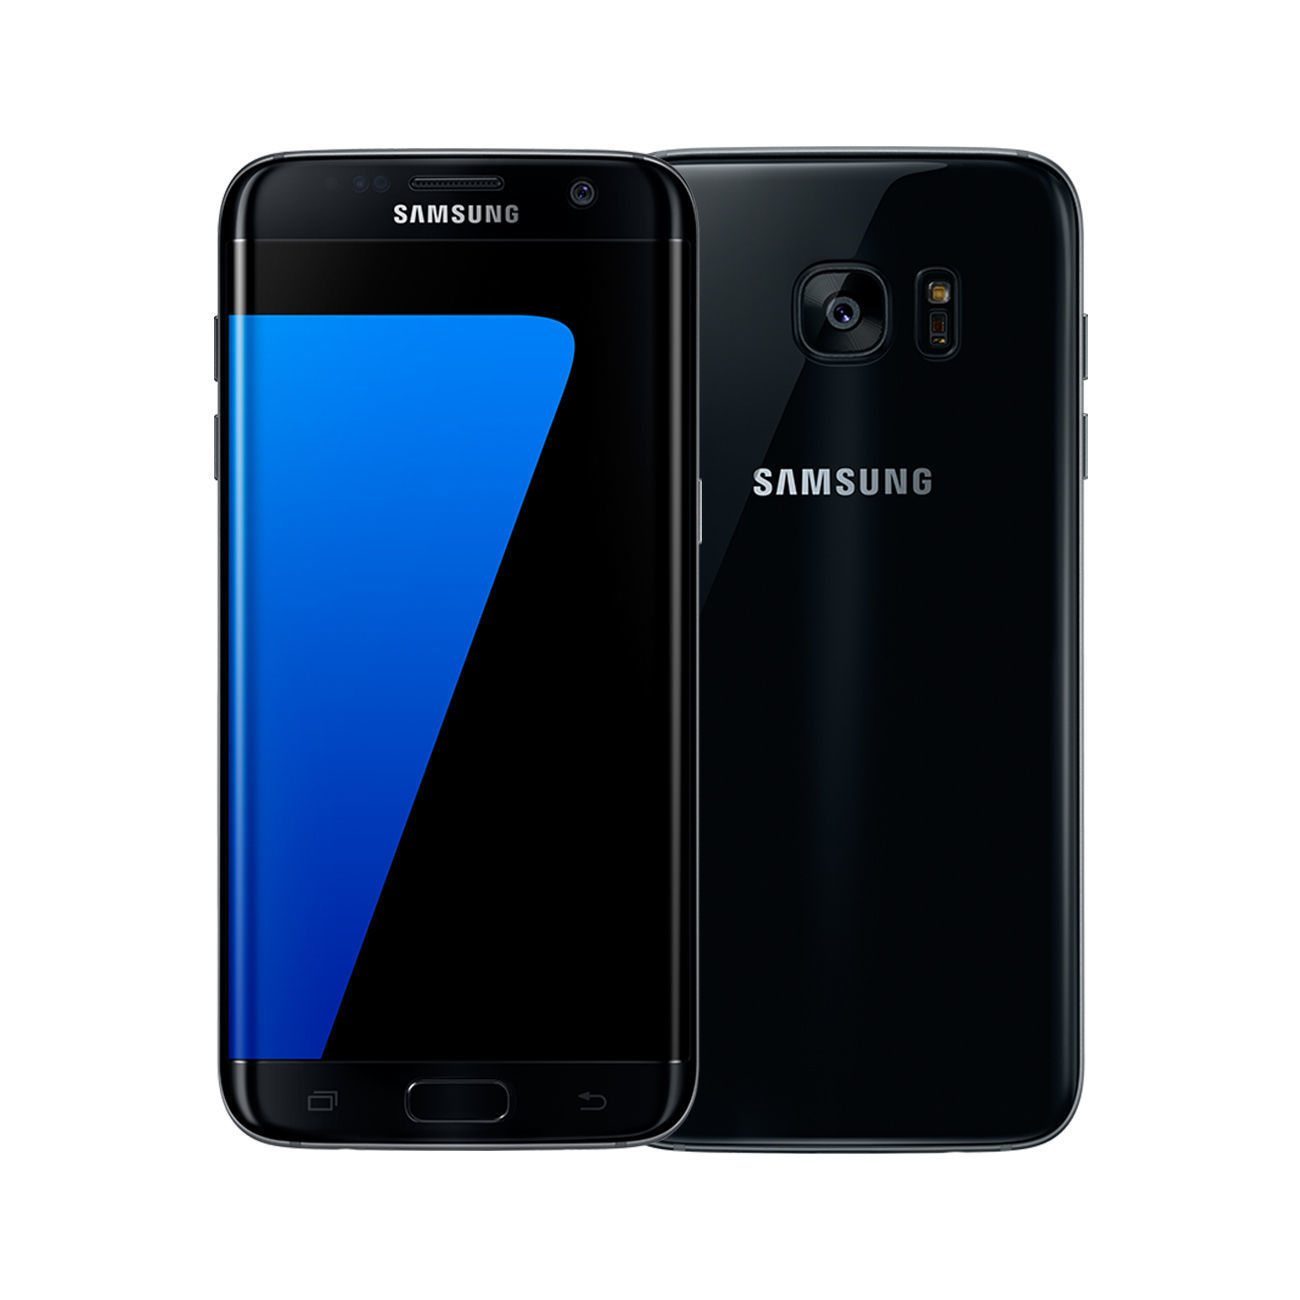 Samsung Galaxy S7 edge [32GB] [Black Onyx] [Imperfect]